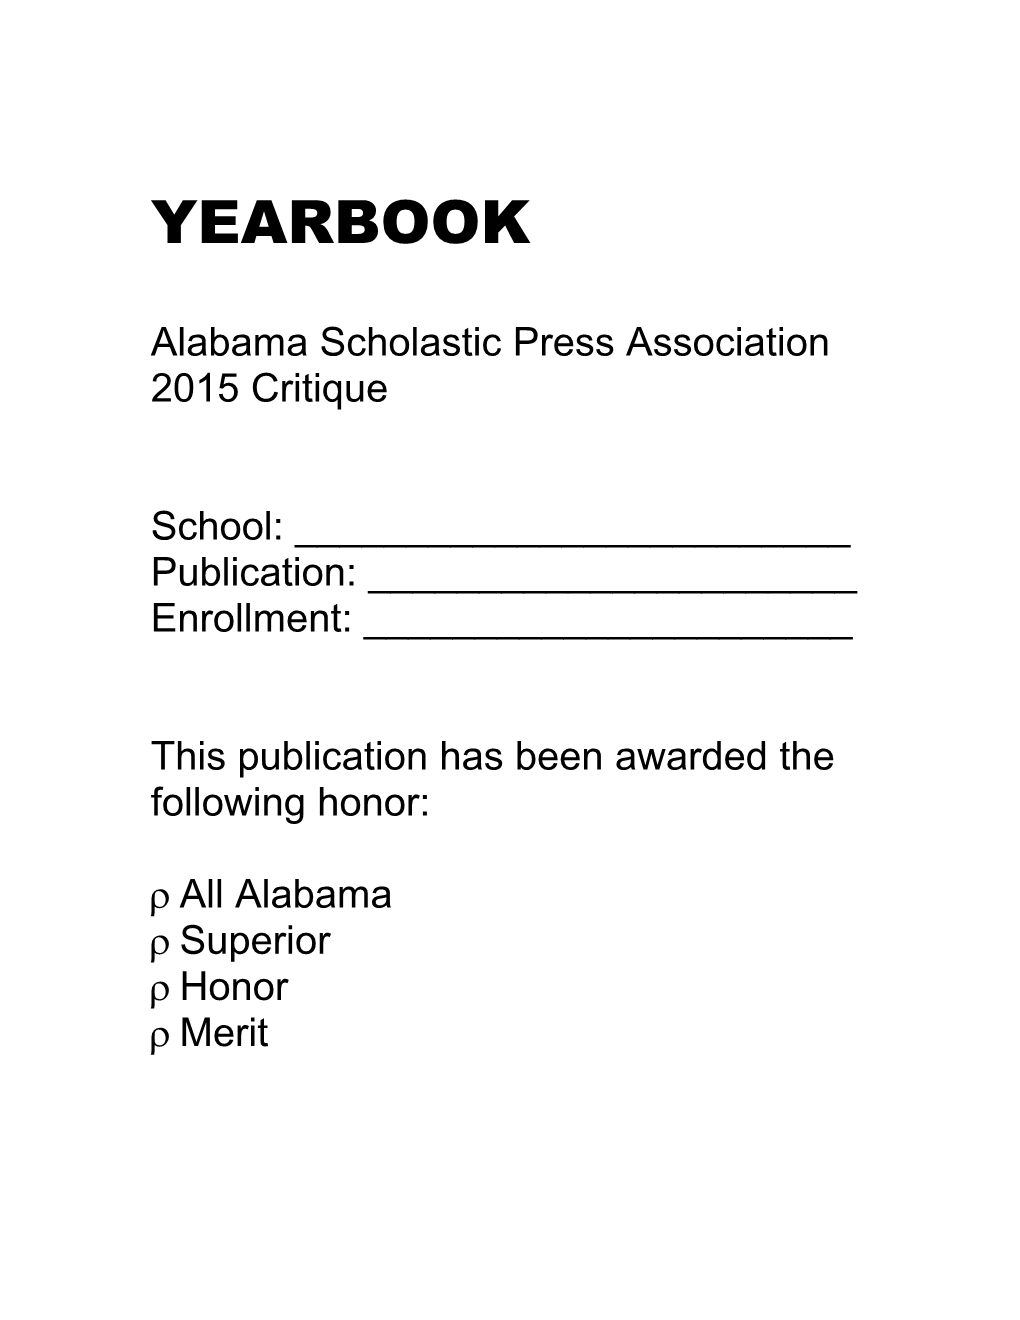 ASPA the Yearbook Scorebook